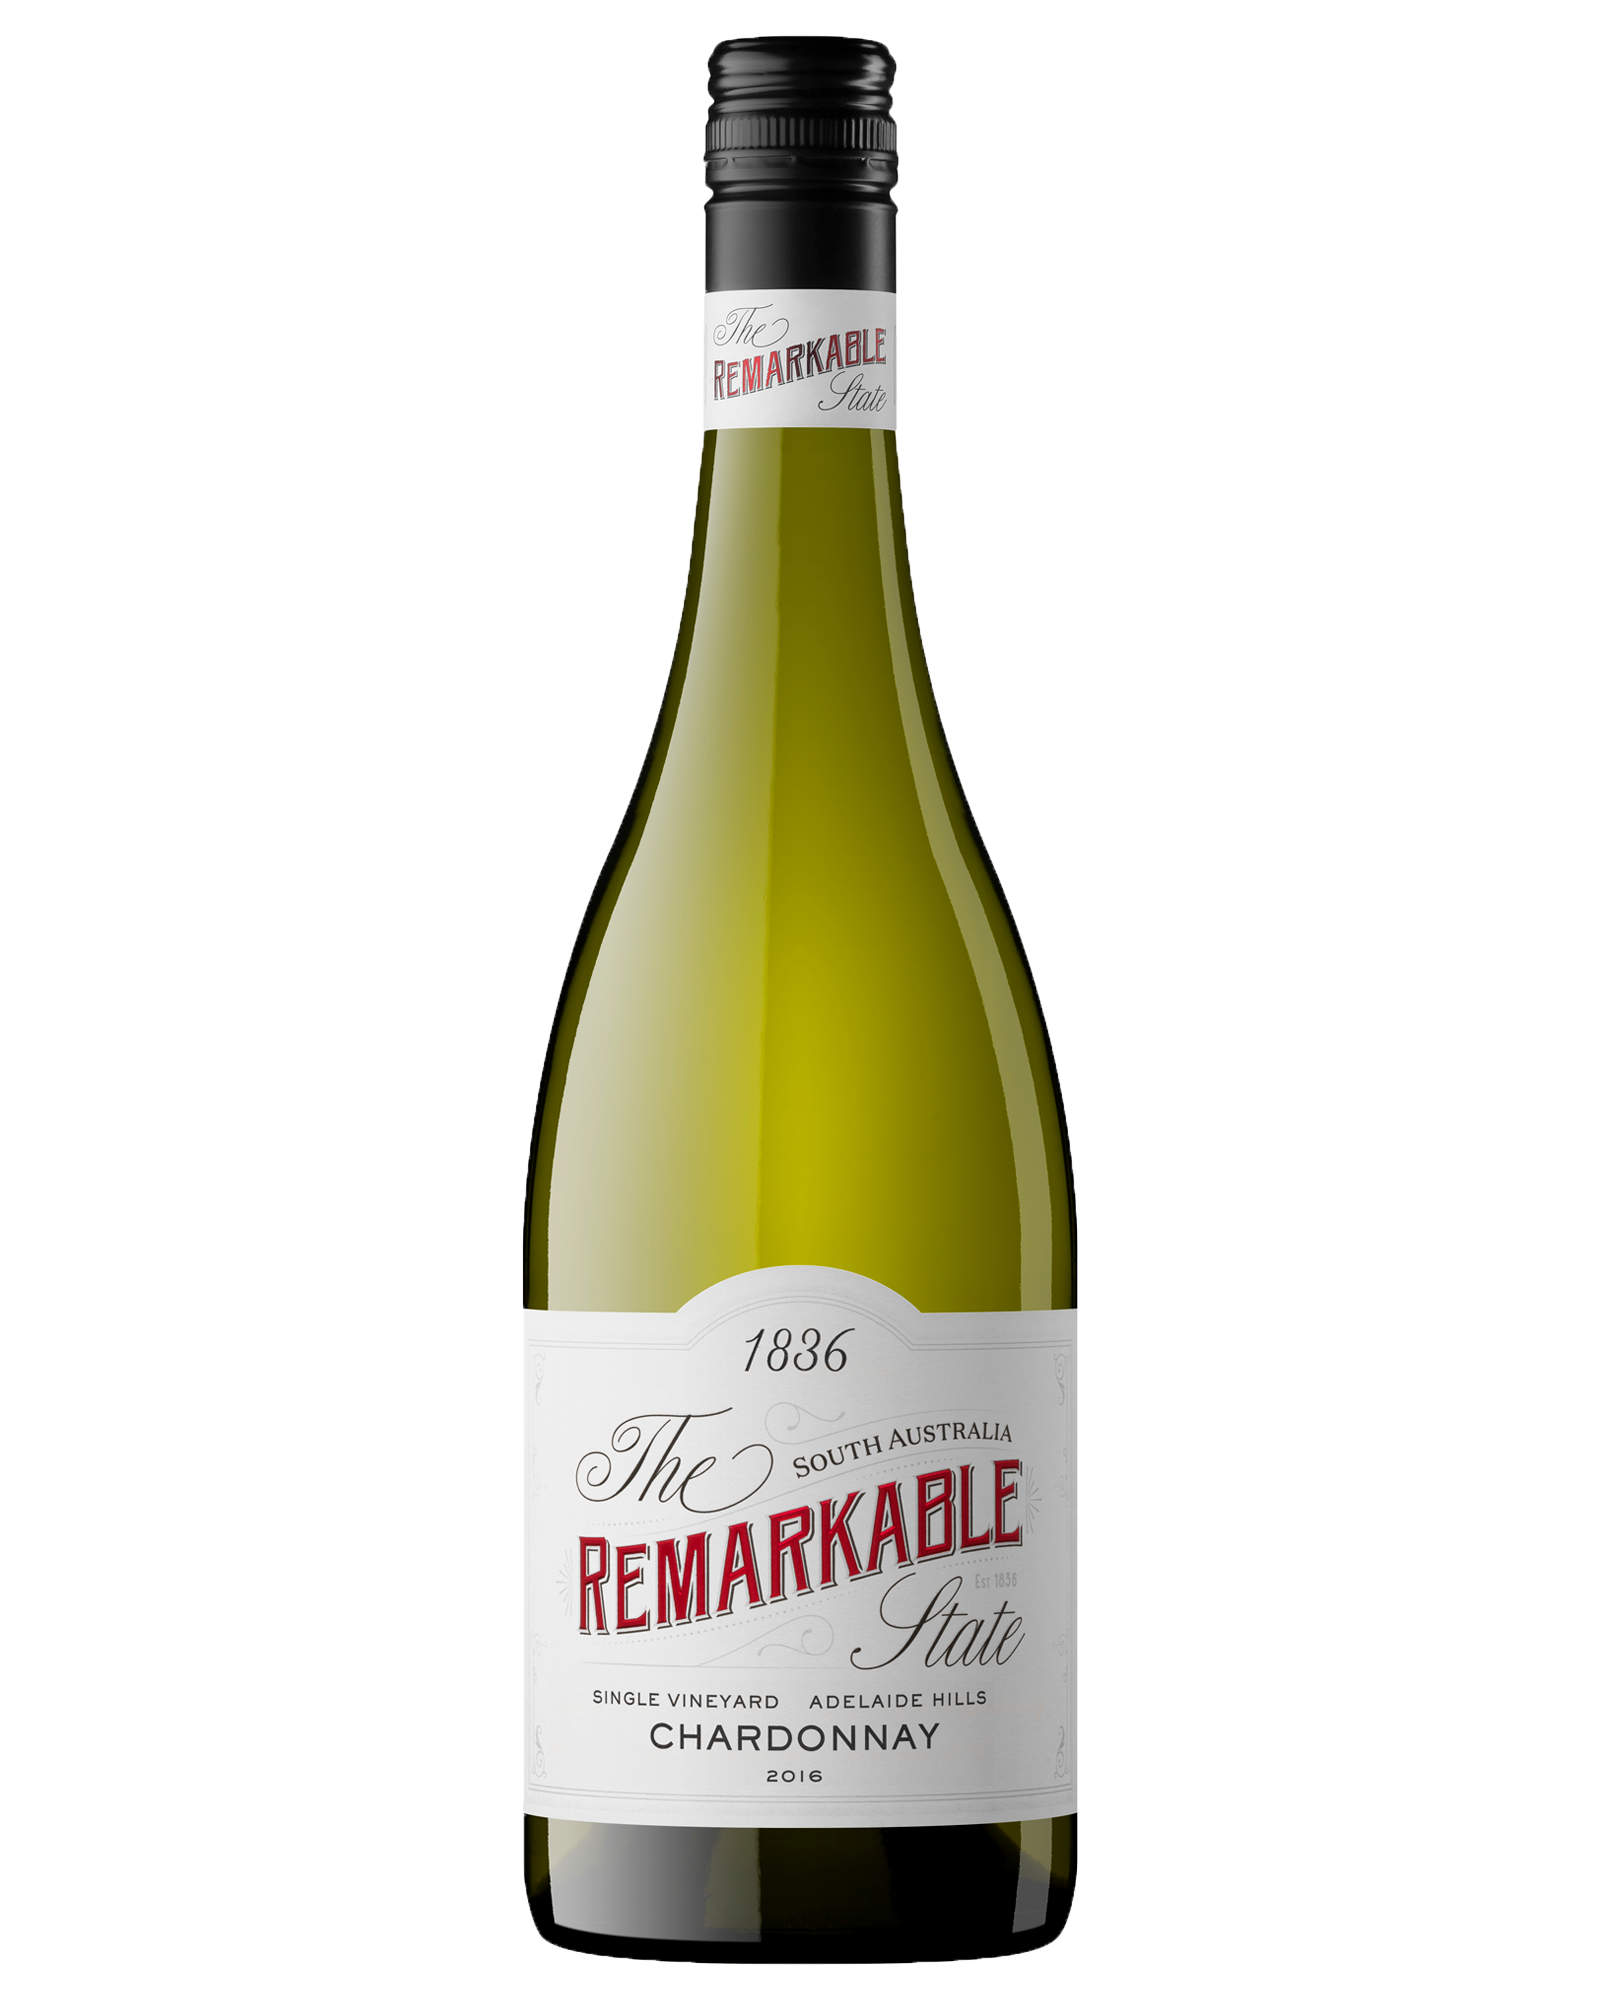 The Remarkable State 1836 Single Vineyard Adelaide Hills Chardonnay 2016